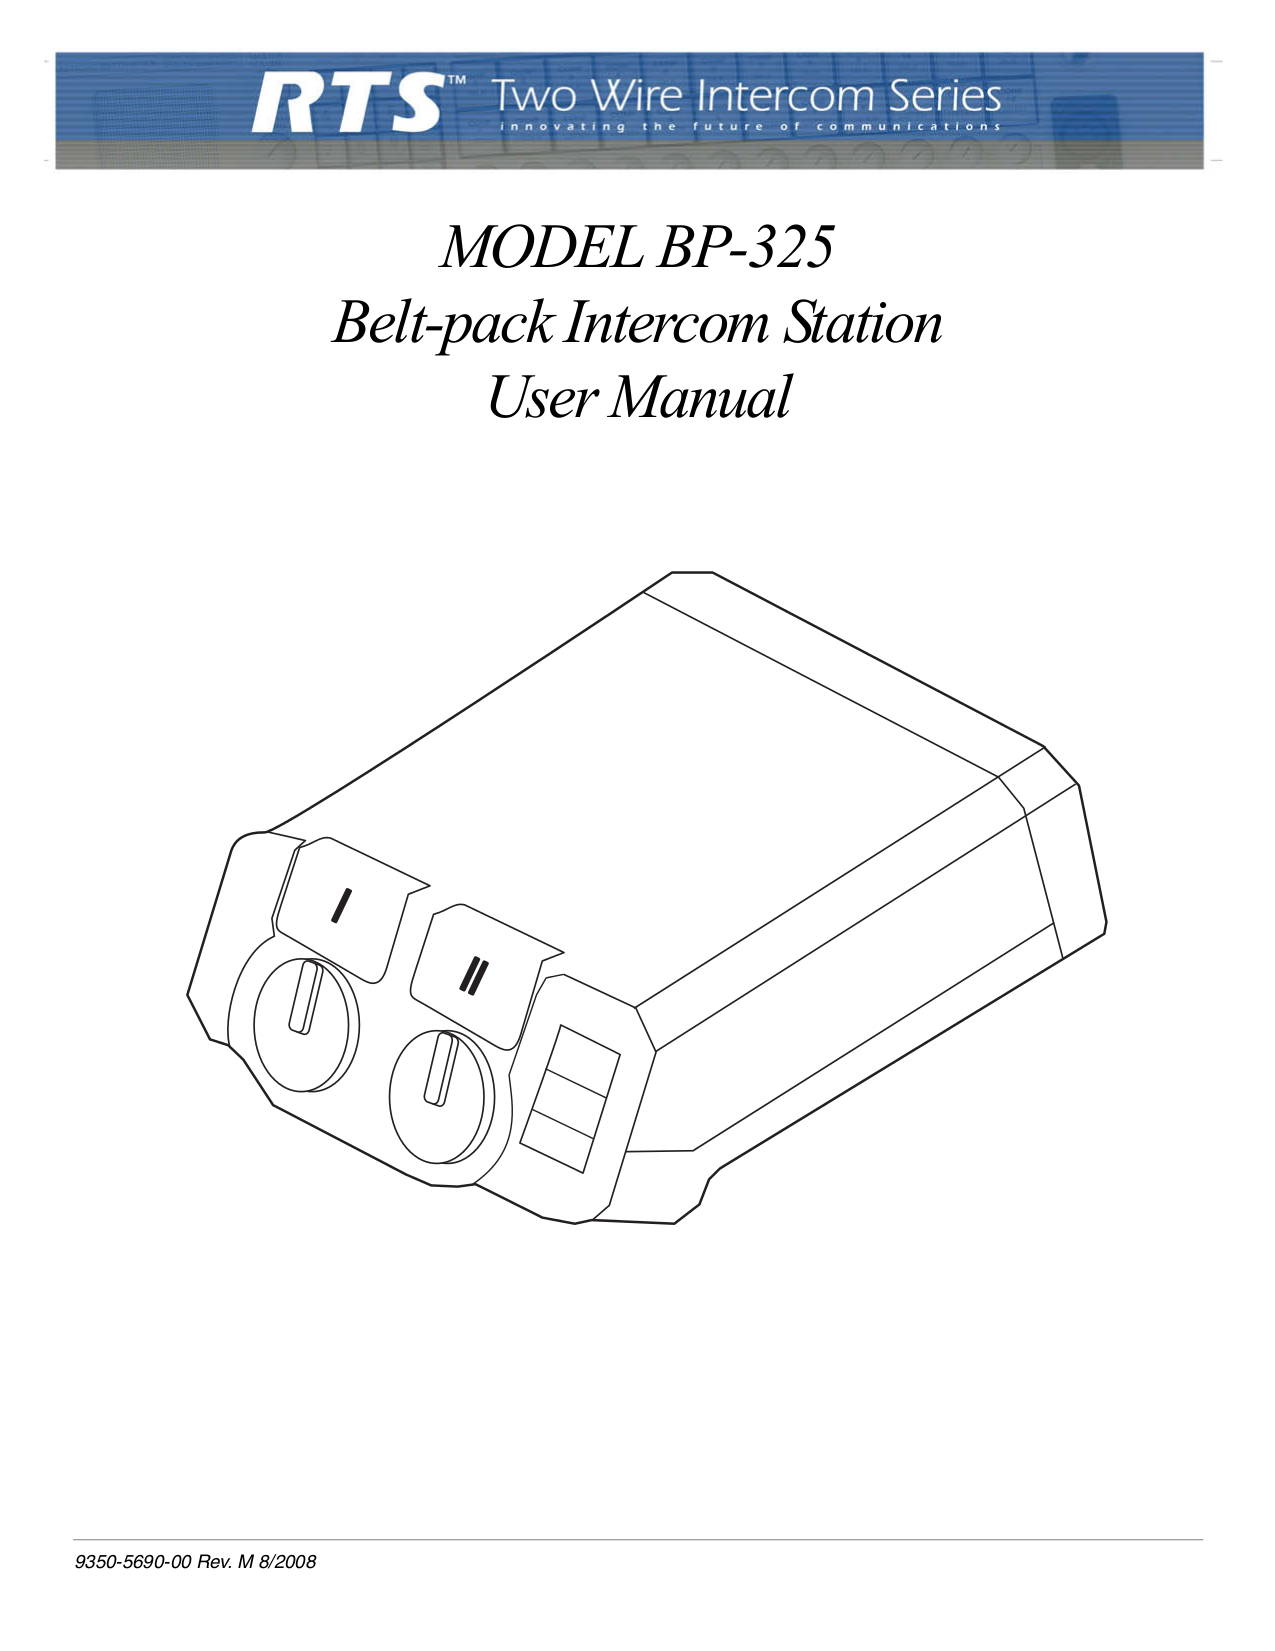 pdf for Telex Other MRT327 IntercomSystem manual